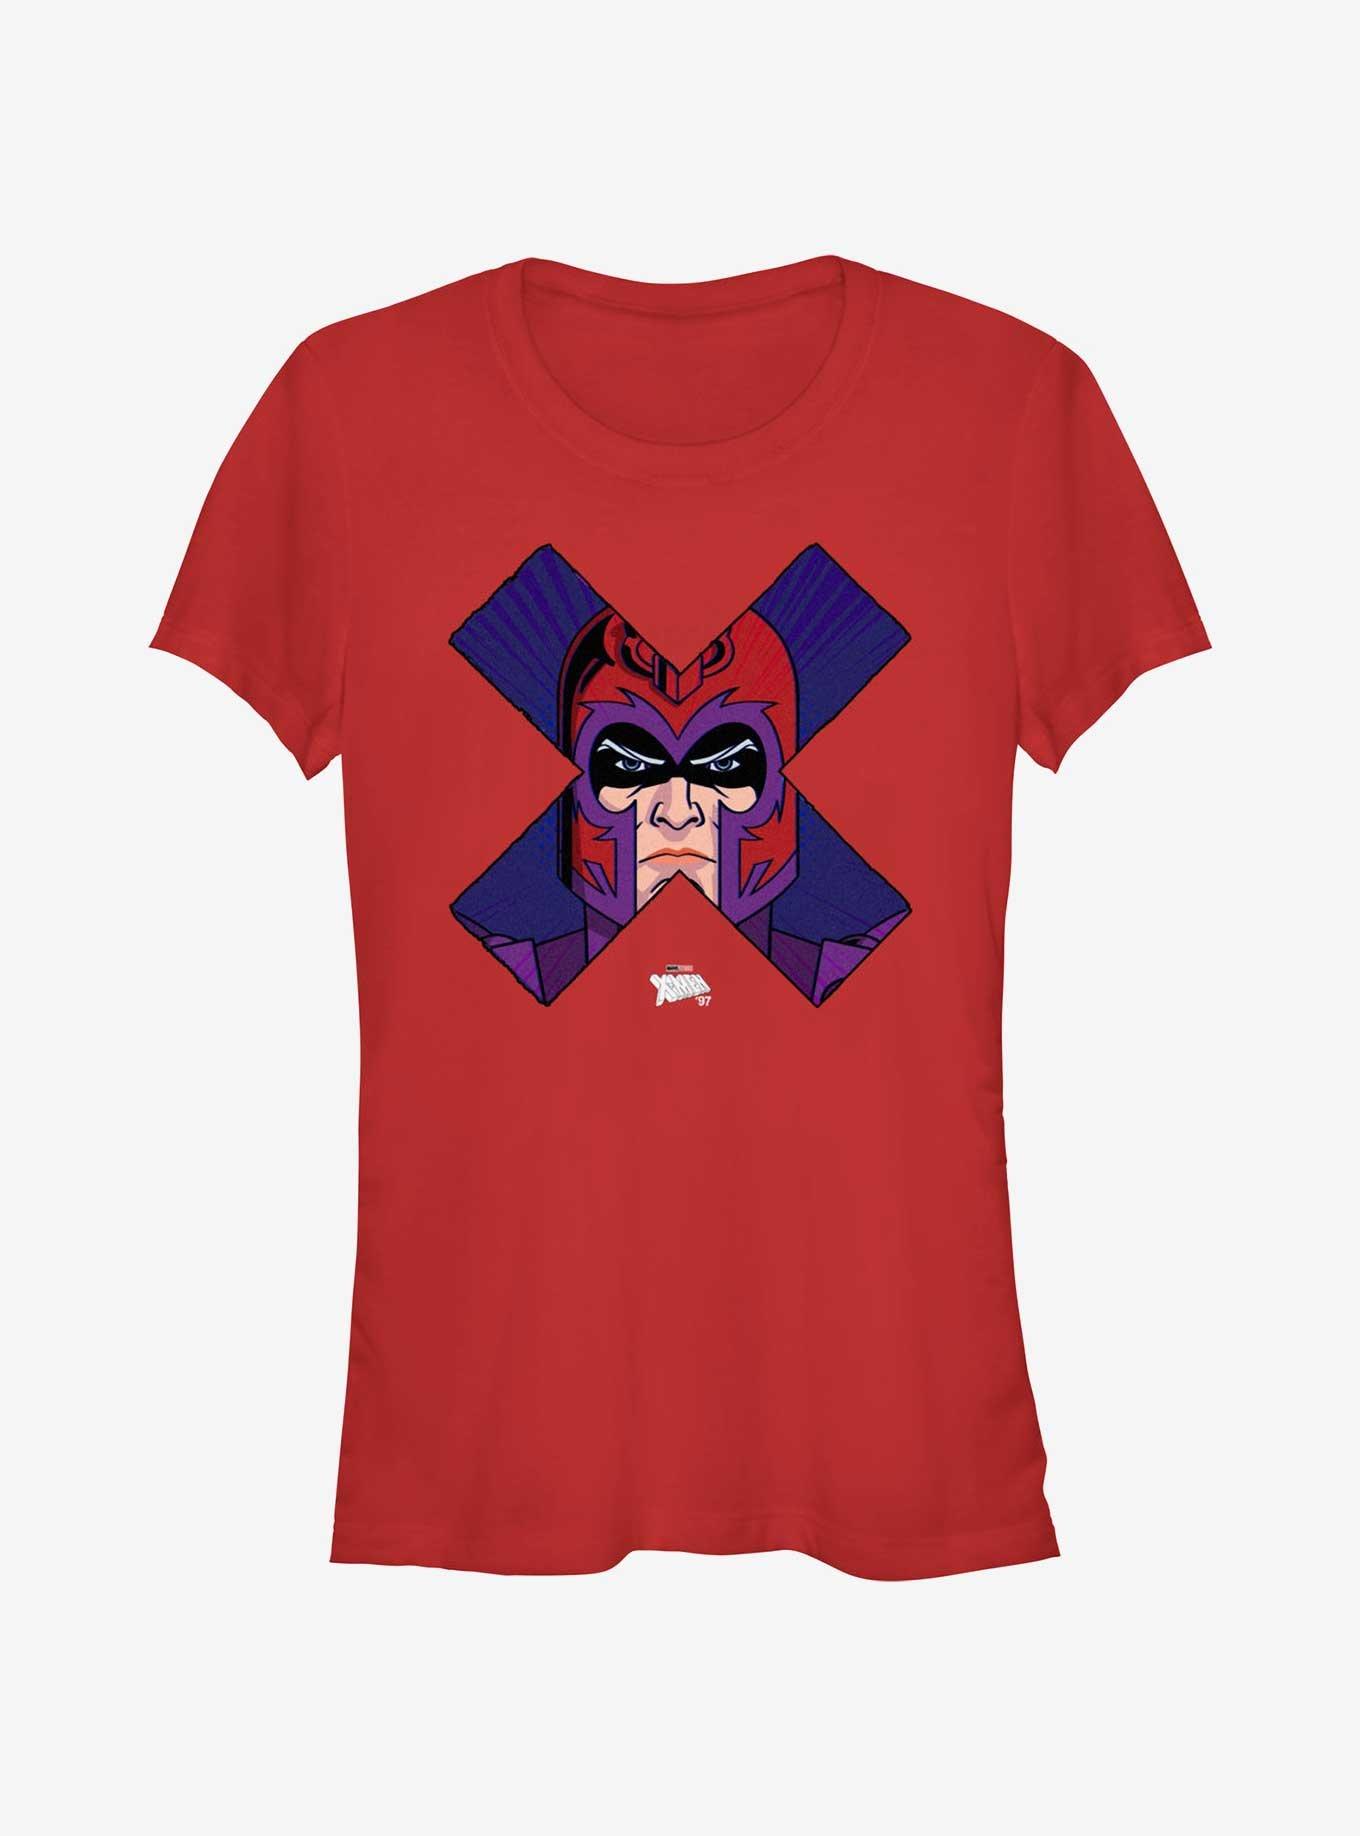 X-Men '97 Magneto Face Girls T-Shirt, RED, hi-res